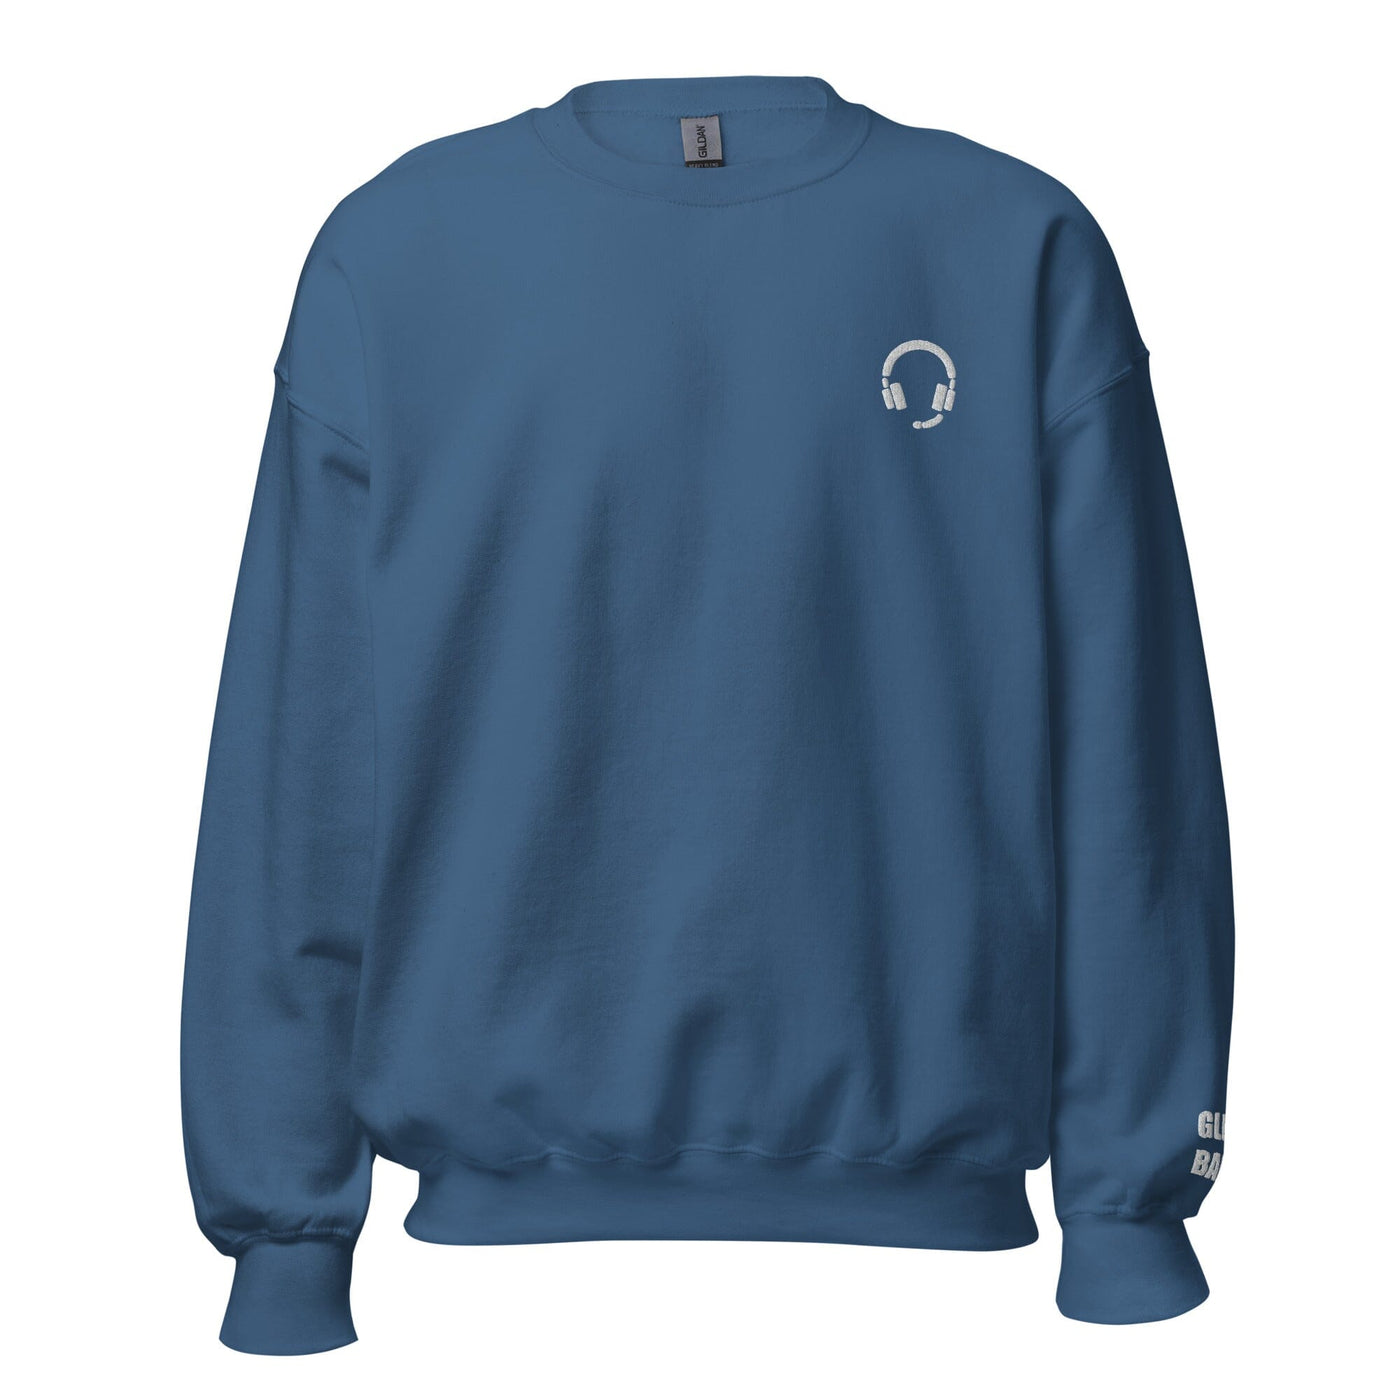 GLHF, Babe | Embroidered Unisex Sweatshirt | Gamer Affirmations Threads & Thistles Inventory Indigo Blue S 